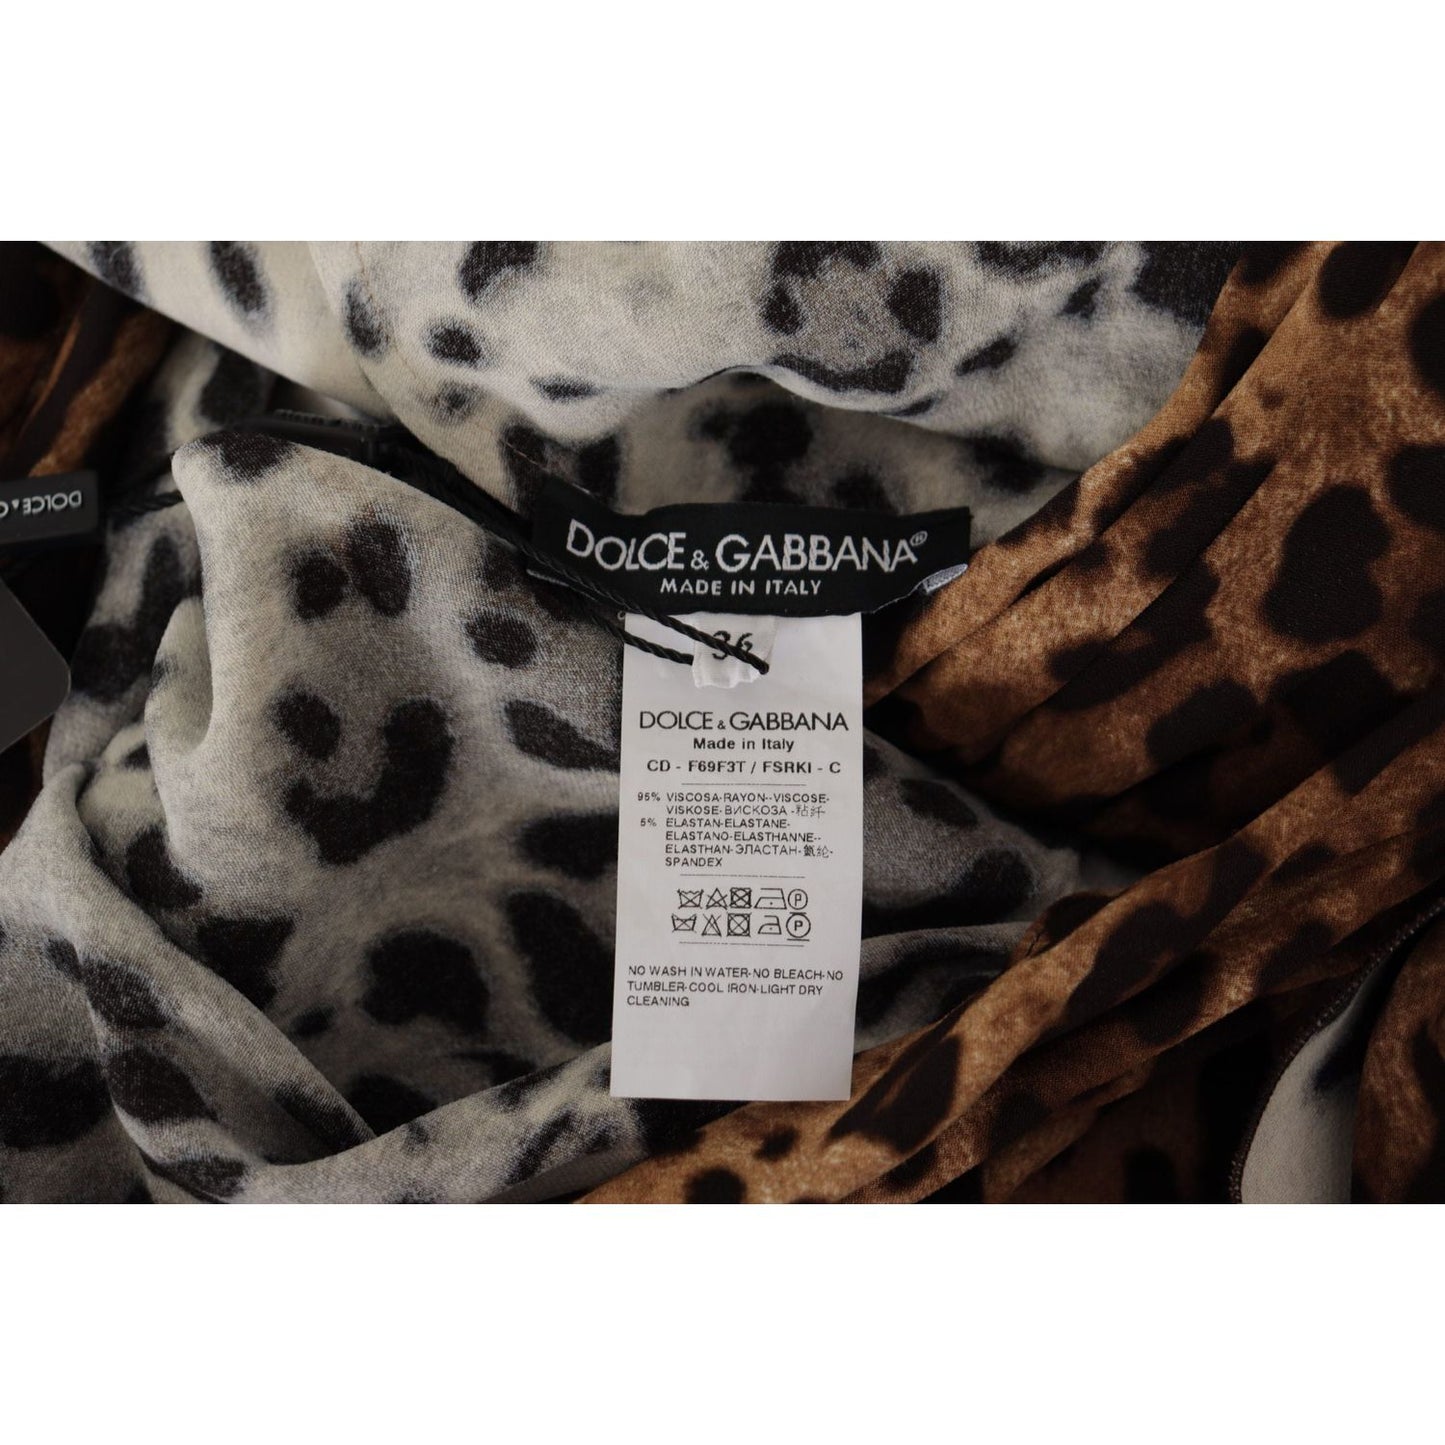 Dolce & Gabbana Elegant V-Neck A-Line Maxi Dress in Brown brown-leopard-wrap-a-line-maxi-viscose-dress